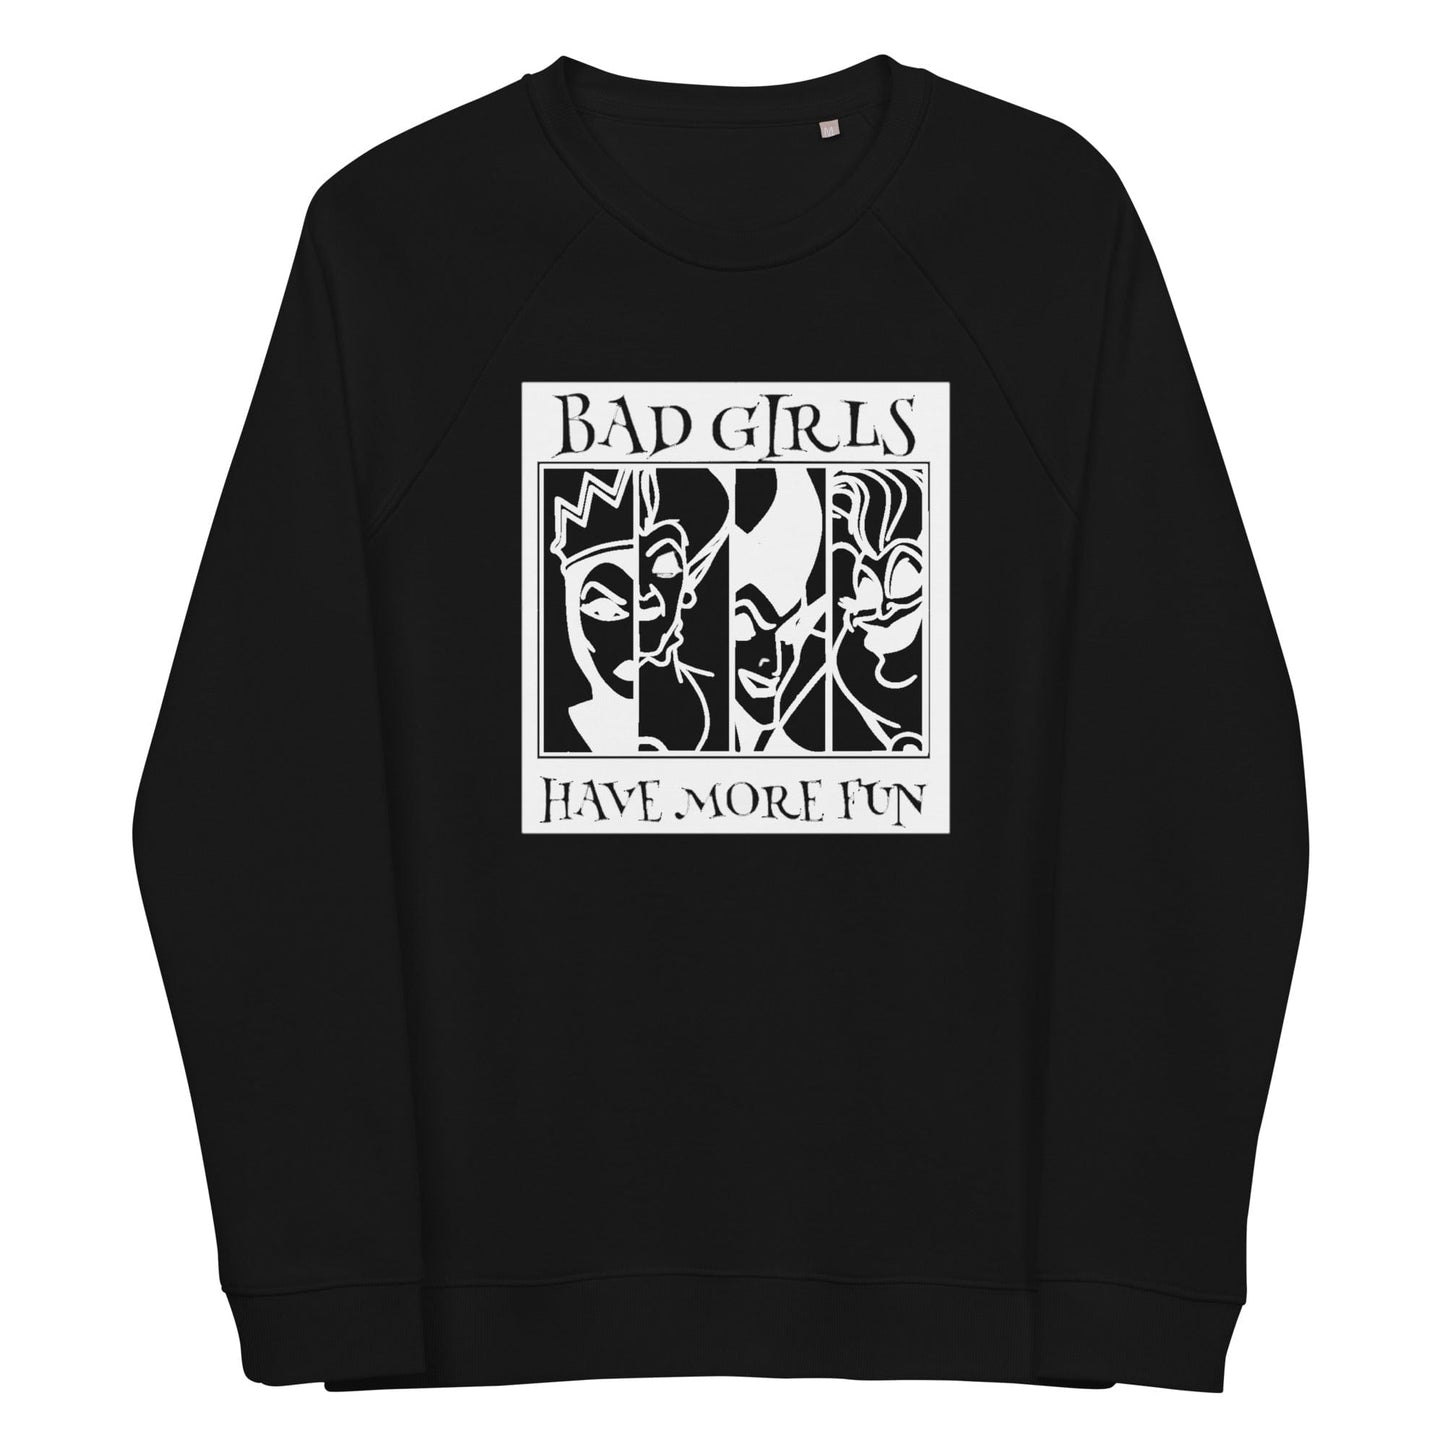 InsensitiviTees Shirts S / Black Bad Girls Have More Fun Sweatshirt